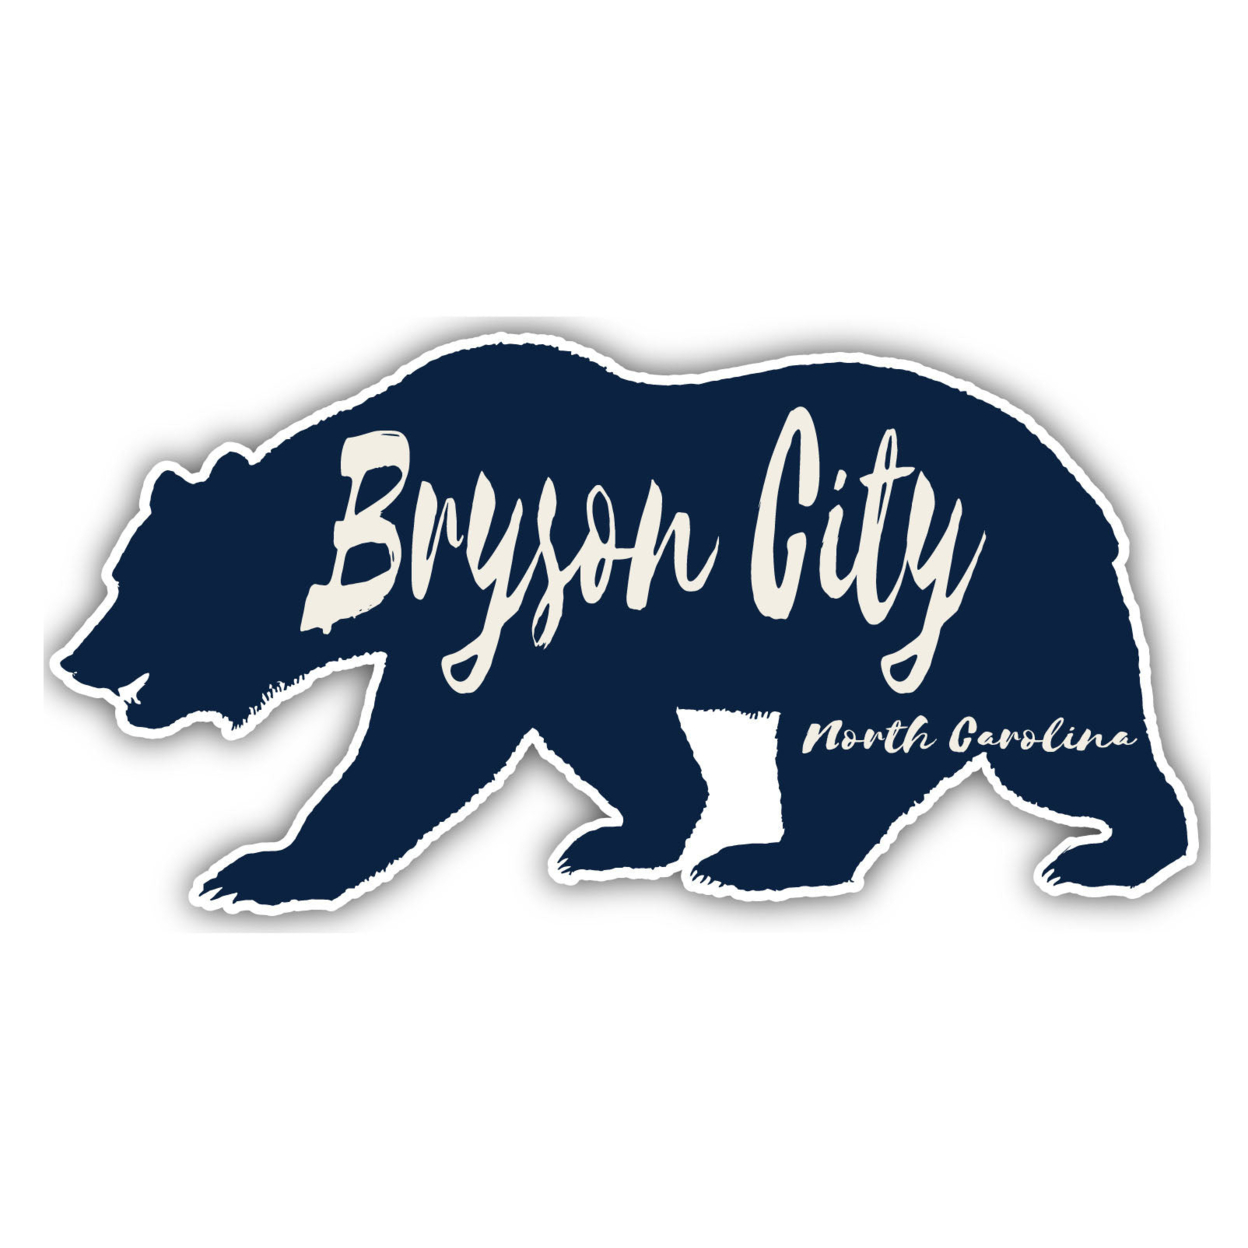 Bryson City North Carolina Souvenir Decorative Stickers (Choose Theme And Size) - Single Unit, 10-Inch, Bear